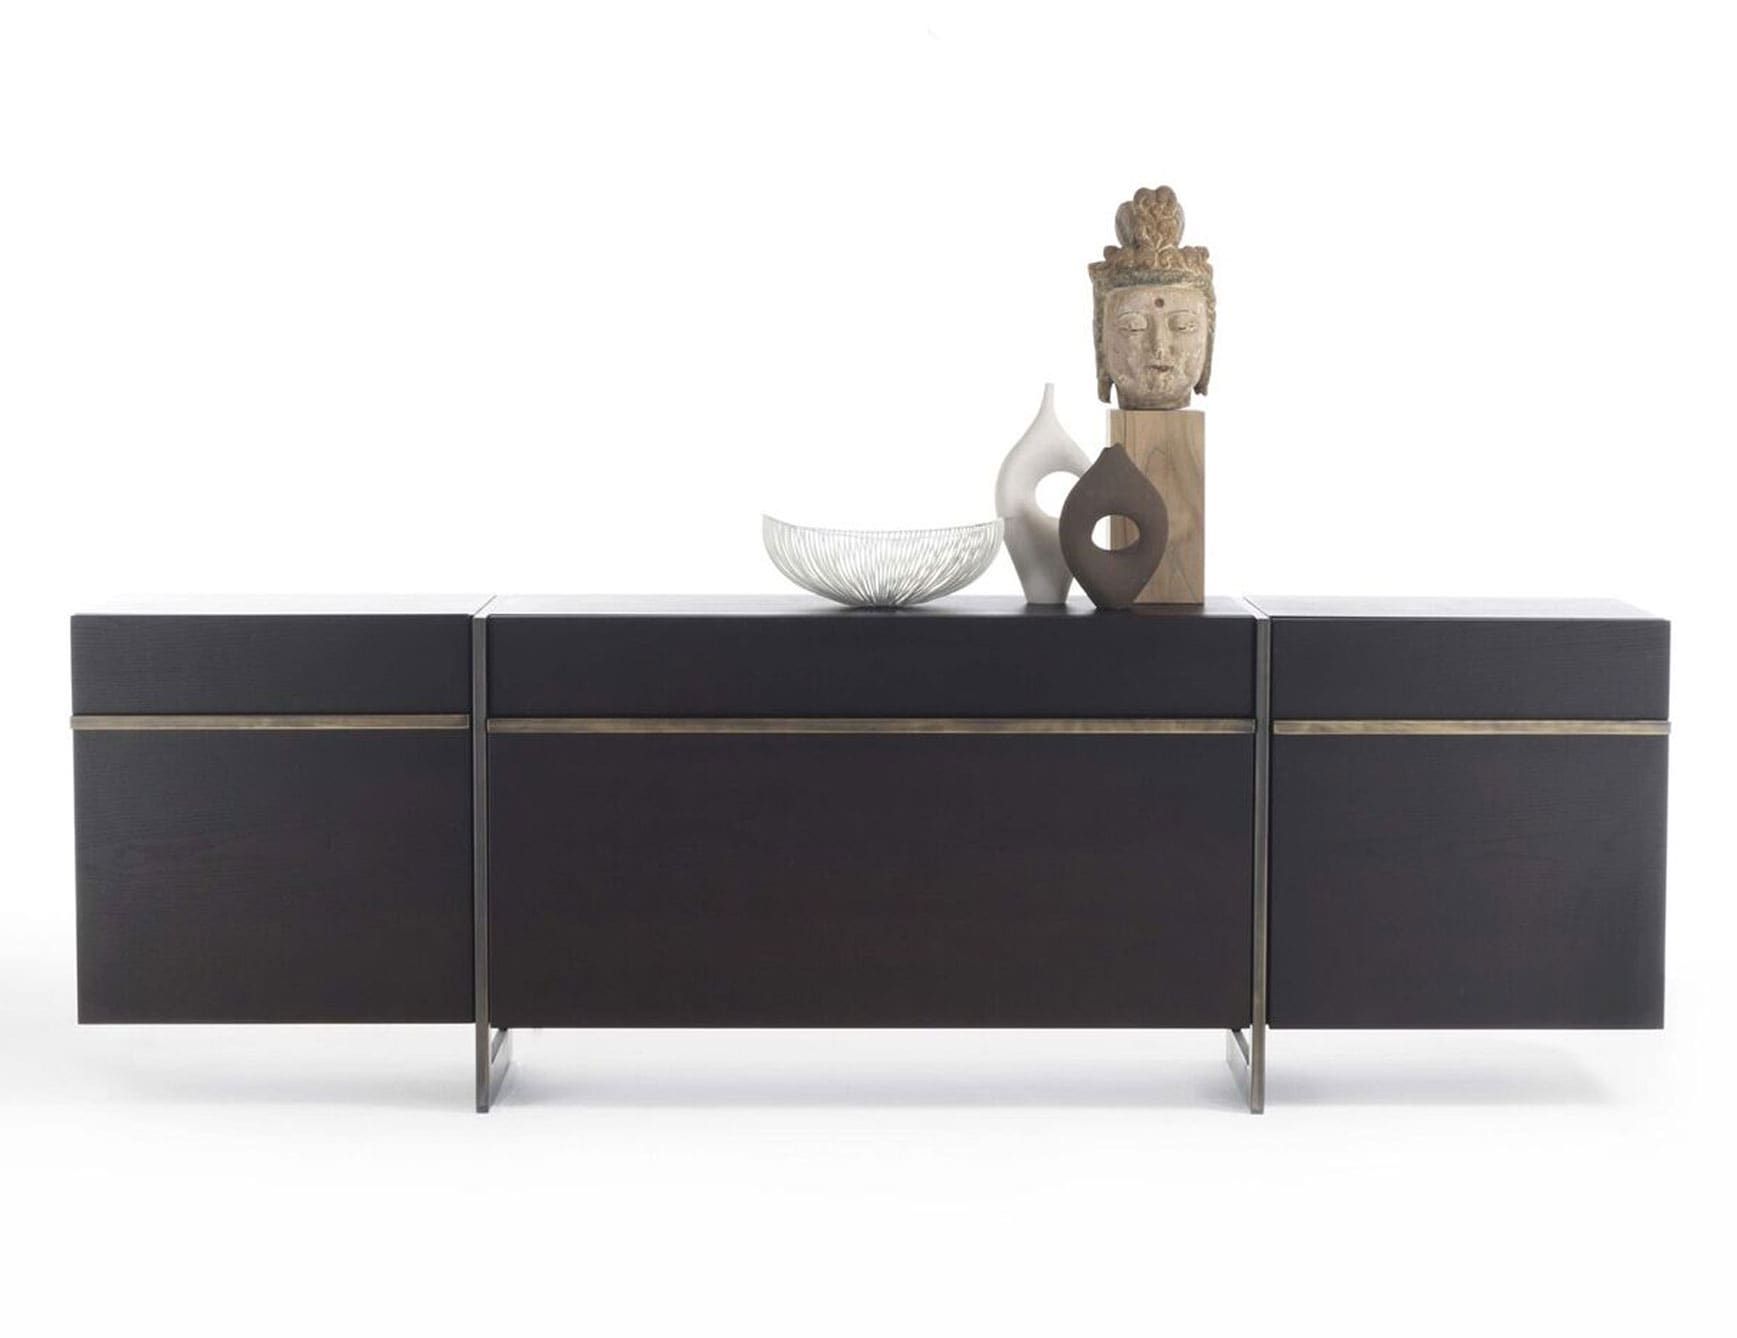 Amalia 1 modern Italian chest of drawers with brown Ash Mocha wood